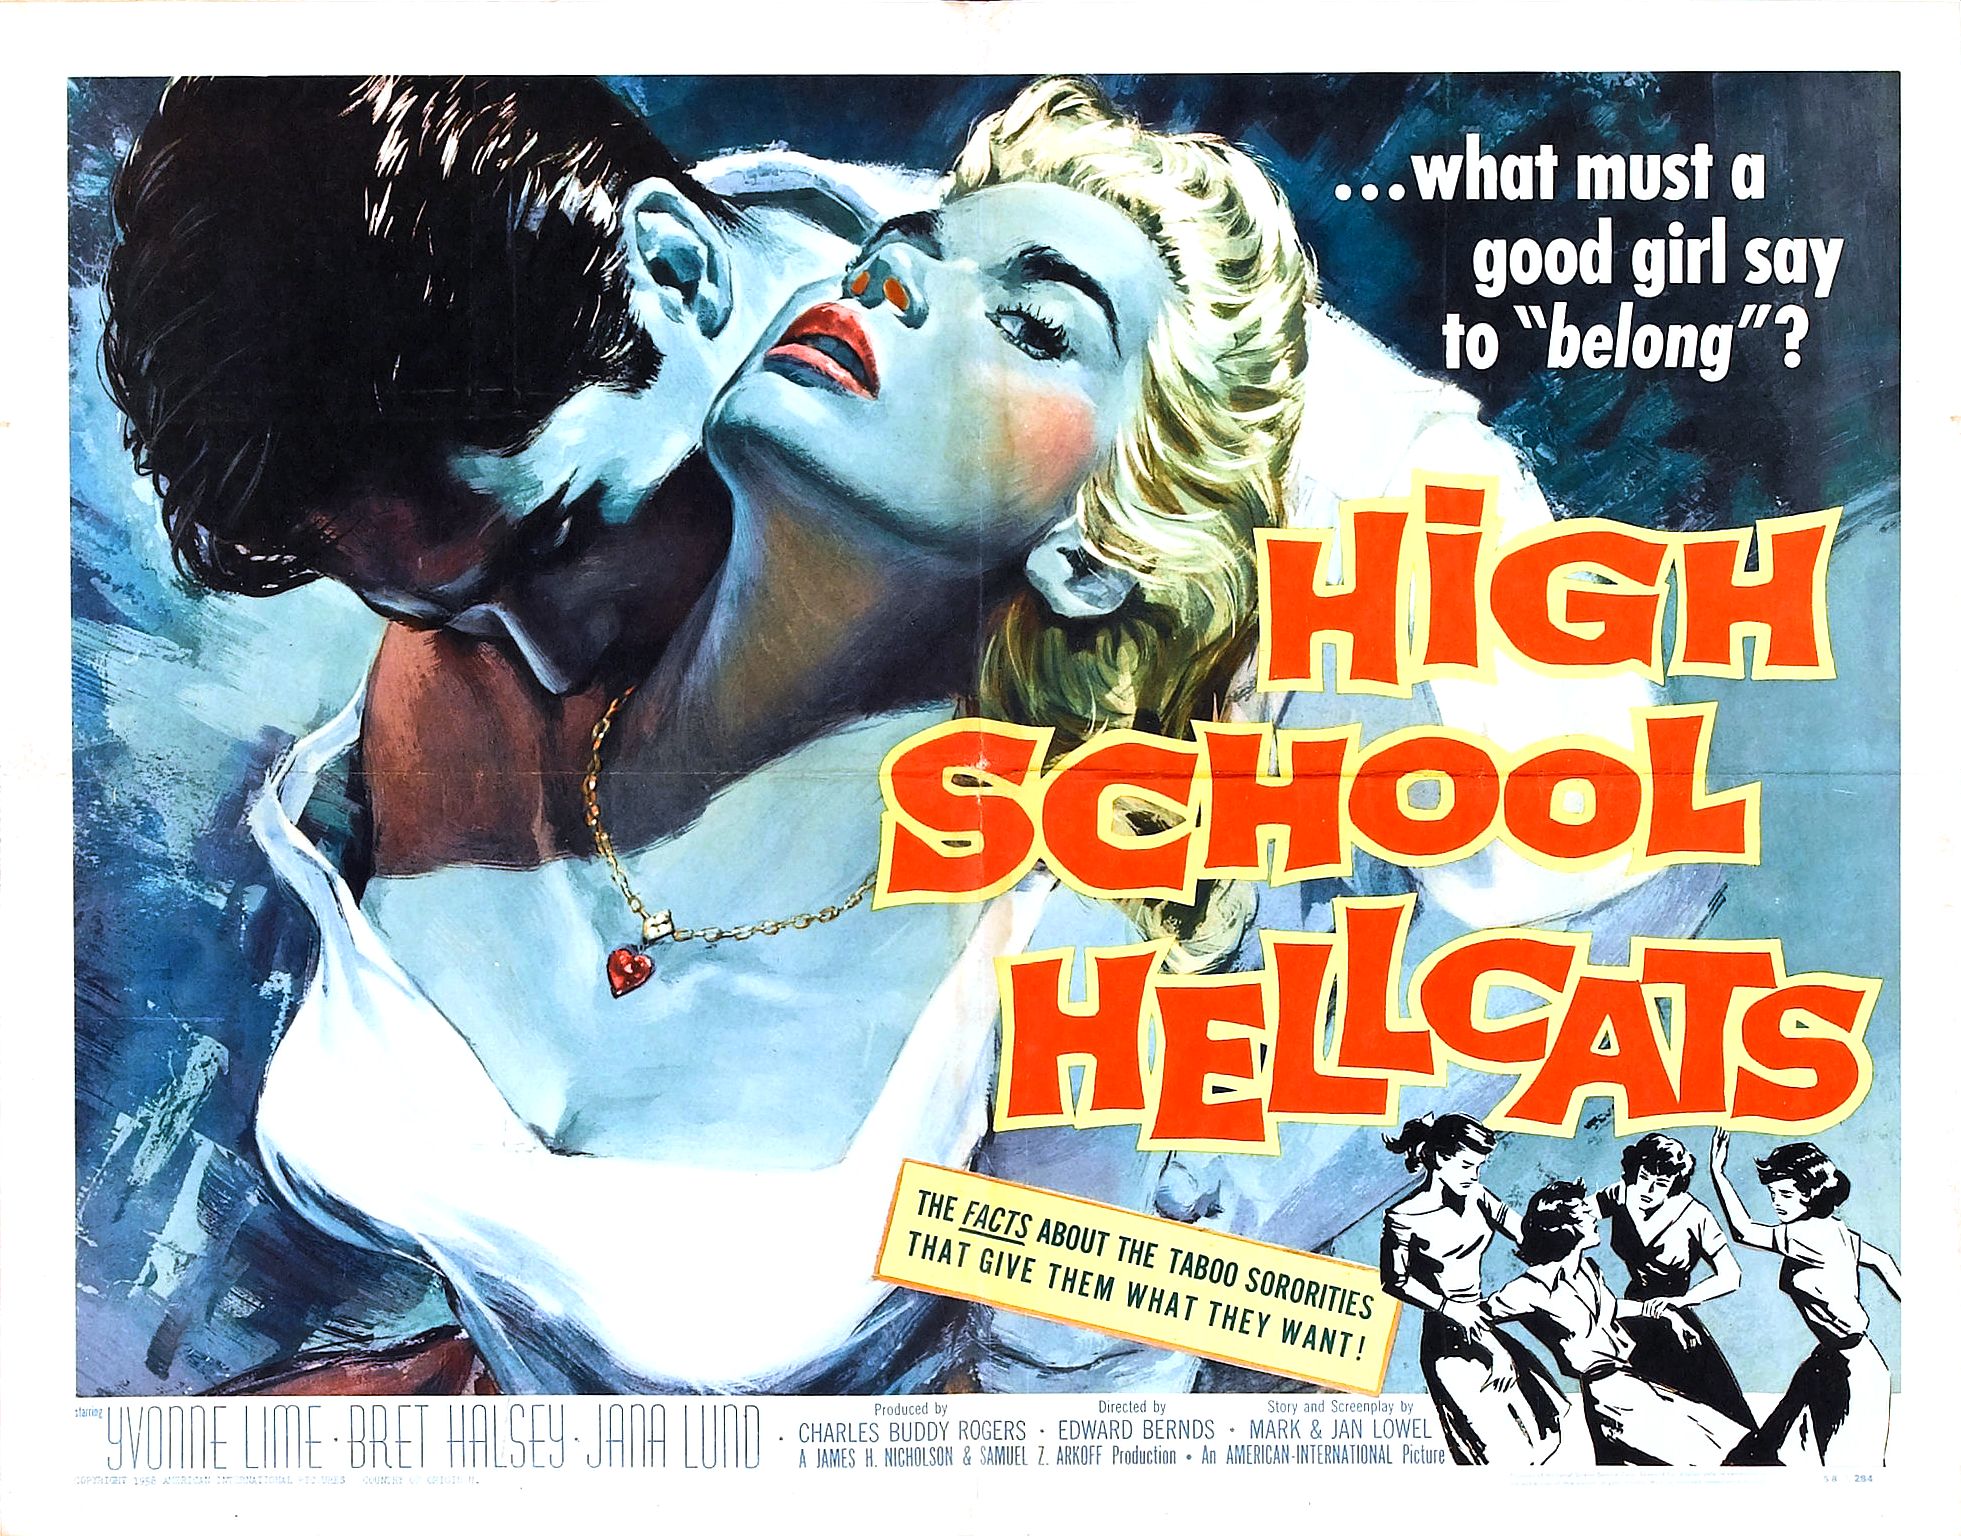 High School Hellcats (1958)